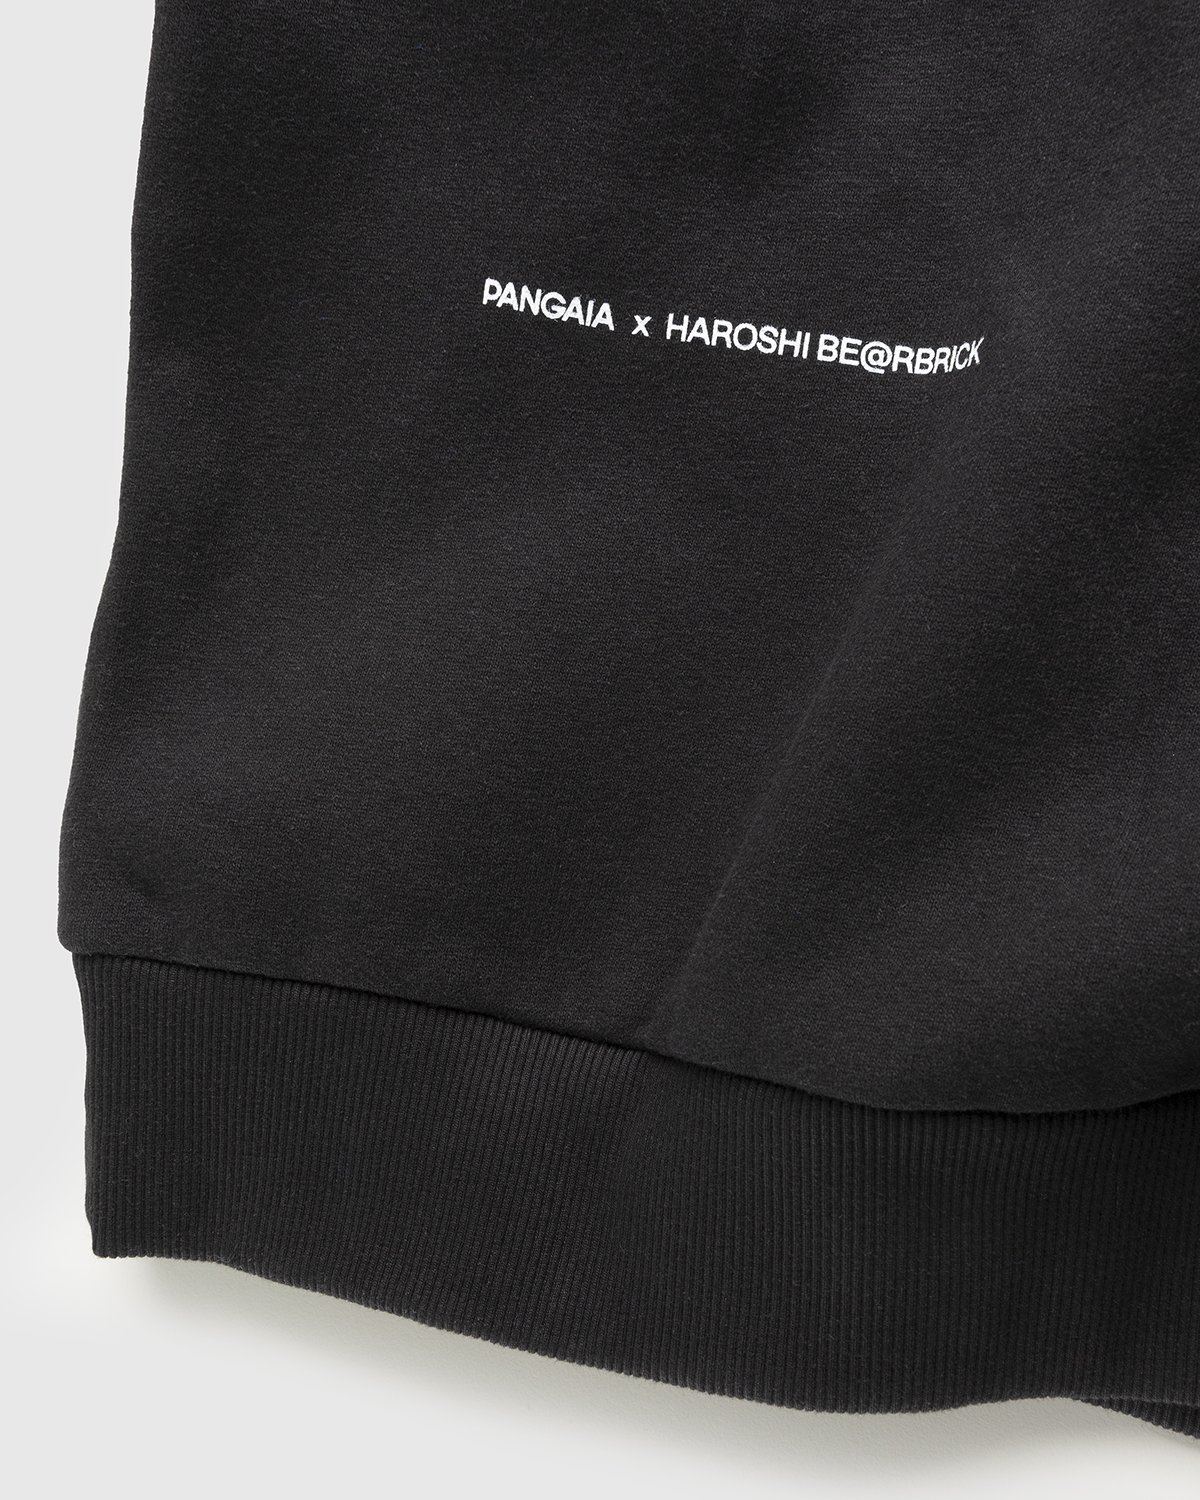 Pangaia x Haroshi - Be@rbrick Recycled Cotton Hoodie Black - Clothing - Black - Image 4